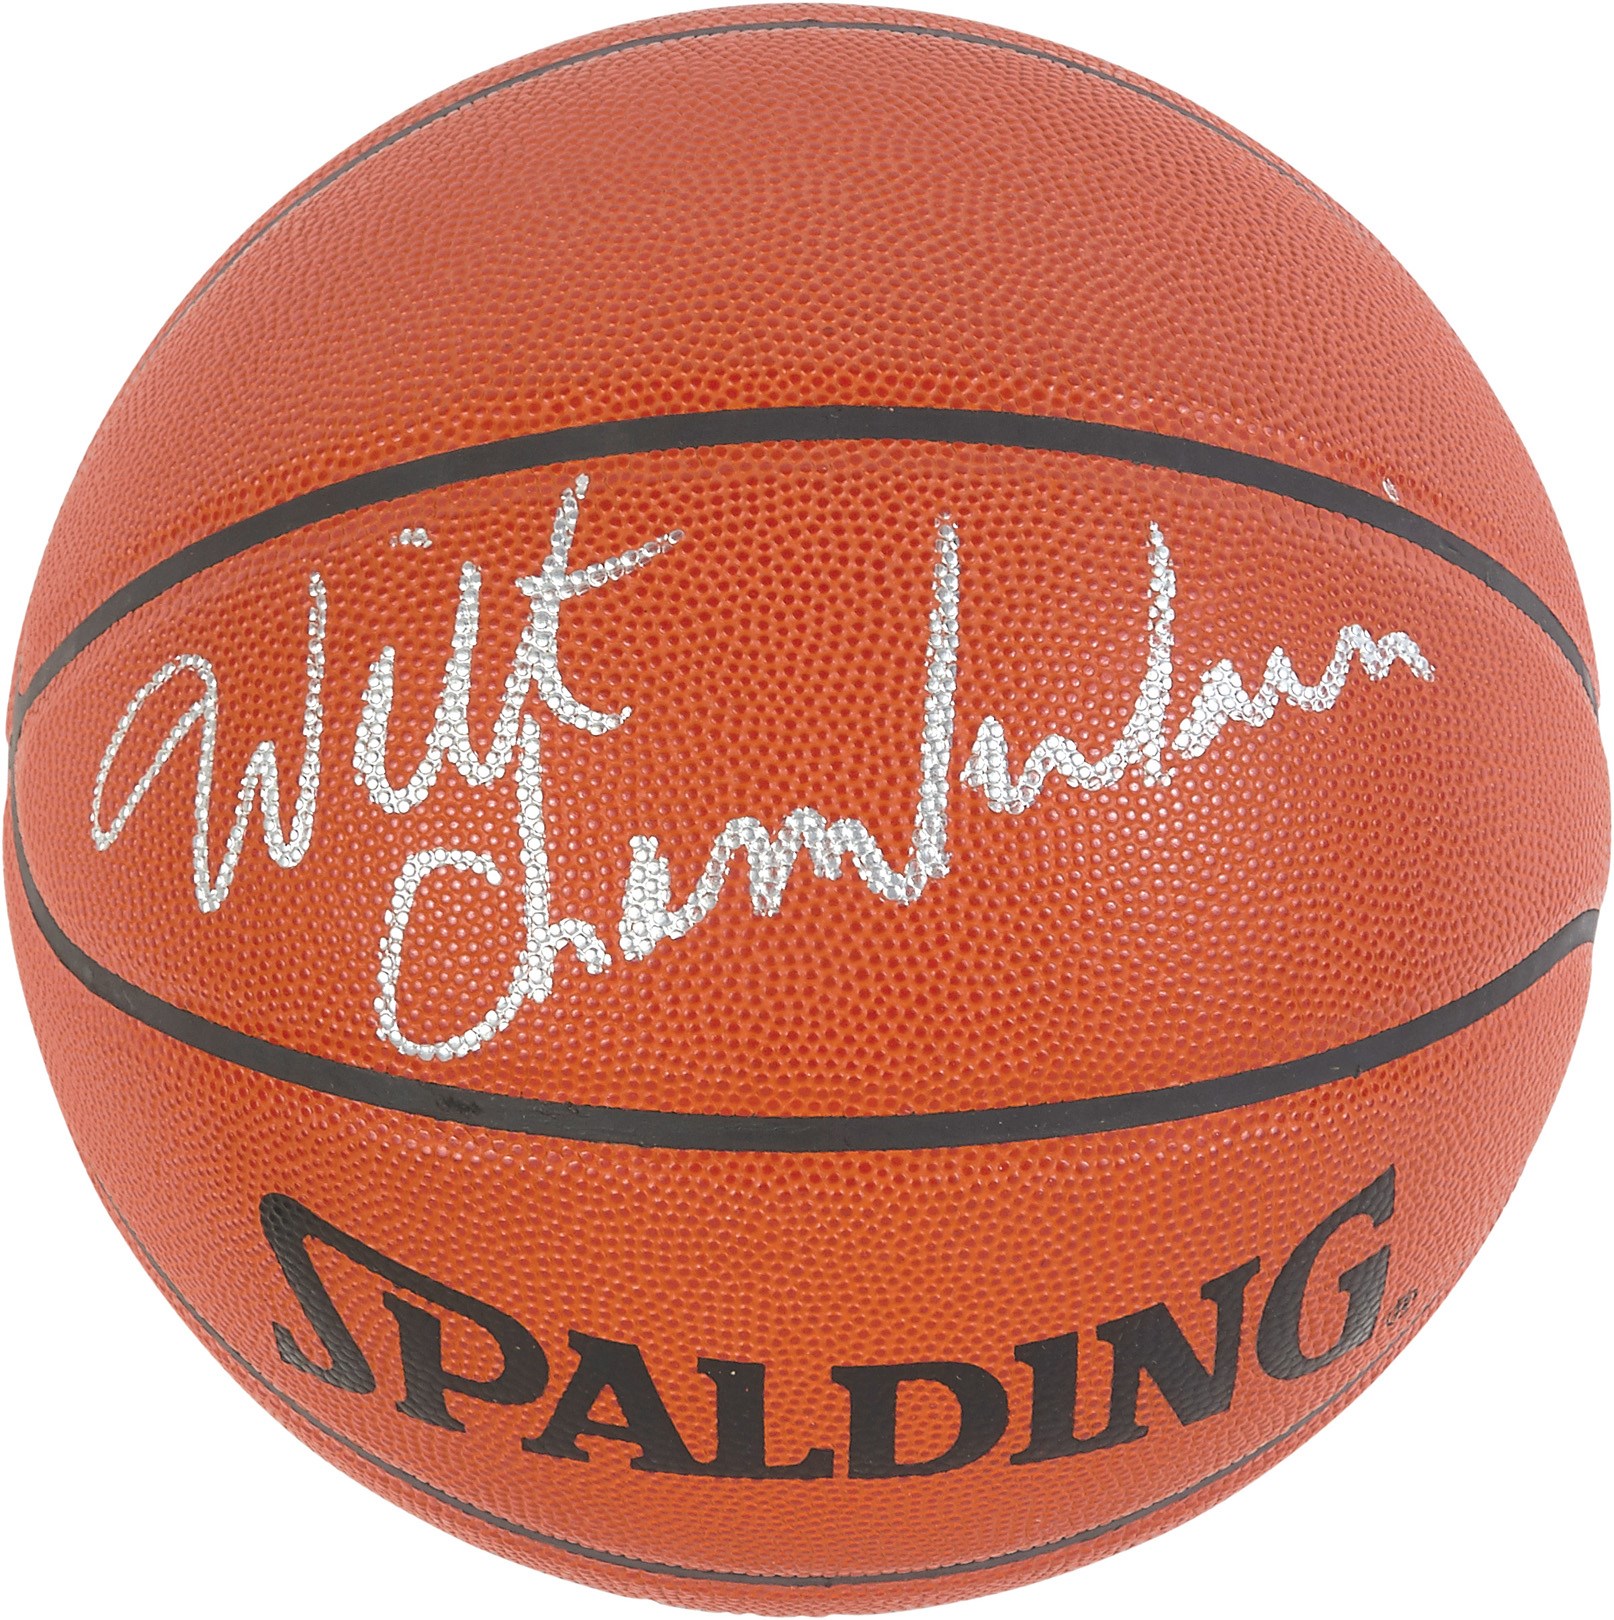 - Wilt Chamberlain Signed Basketball (PSA MINT 9)